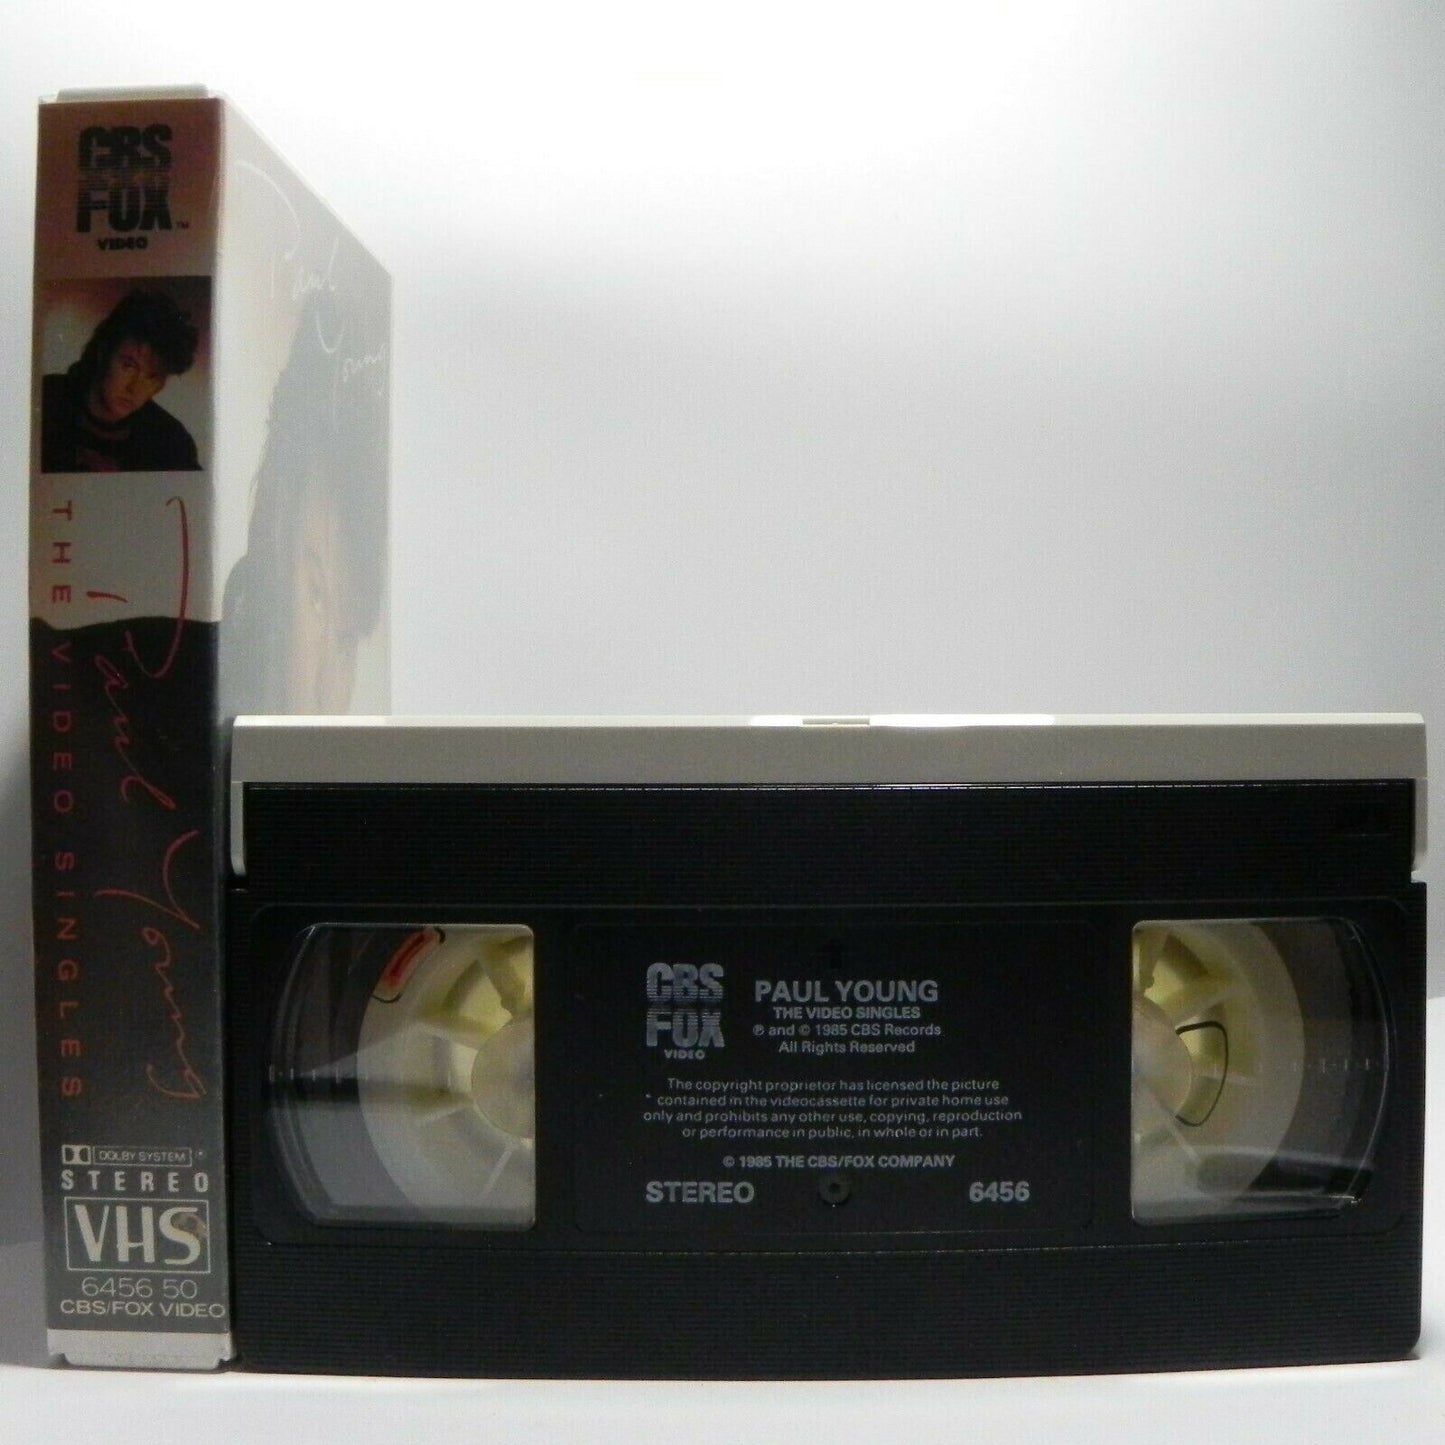 Paul Young: The Video Singles - CBS/FOX - Music Videos - Performances - VHS-